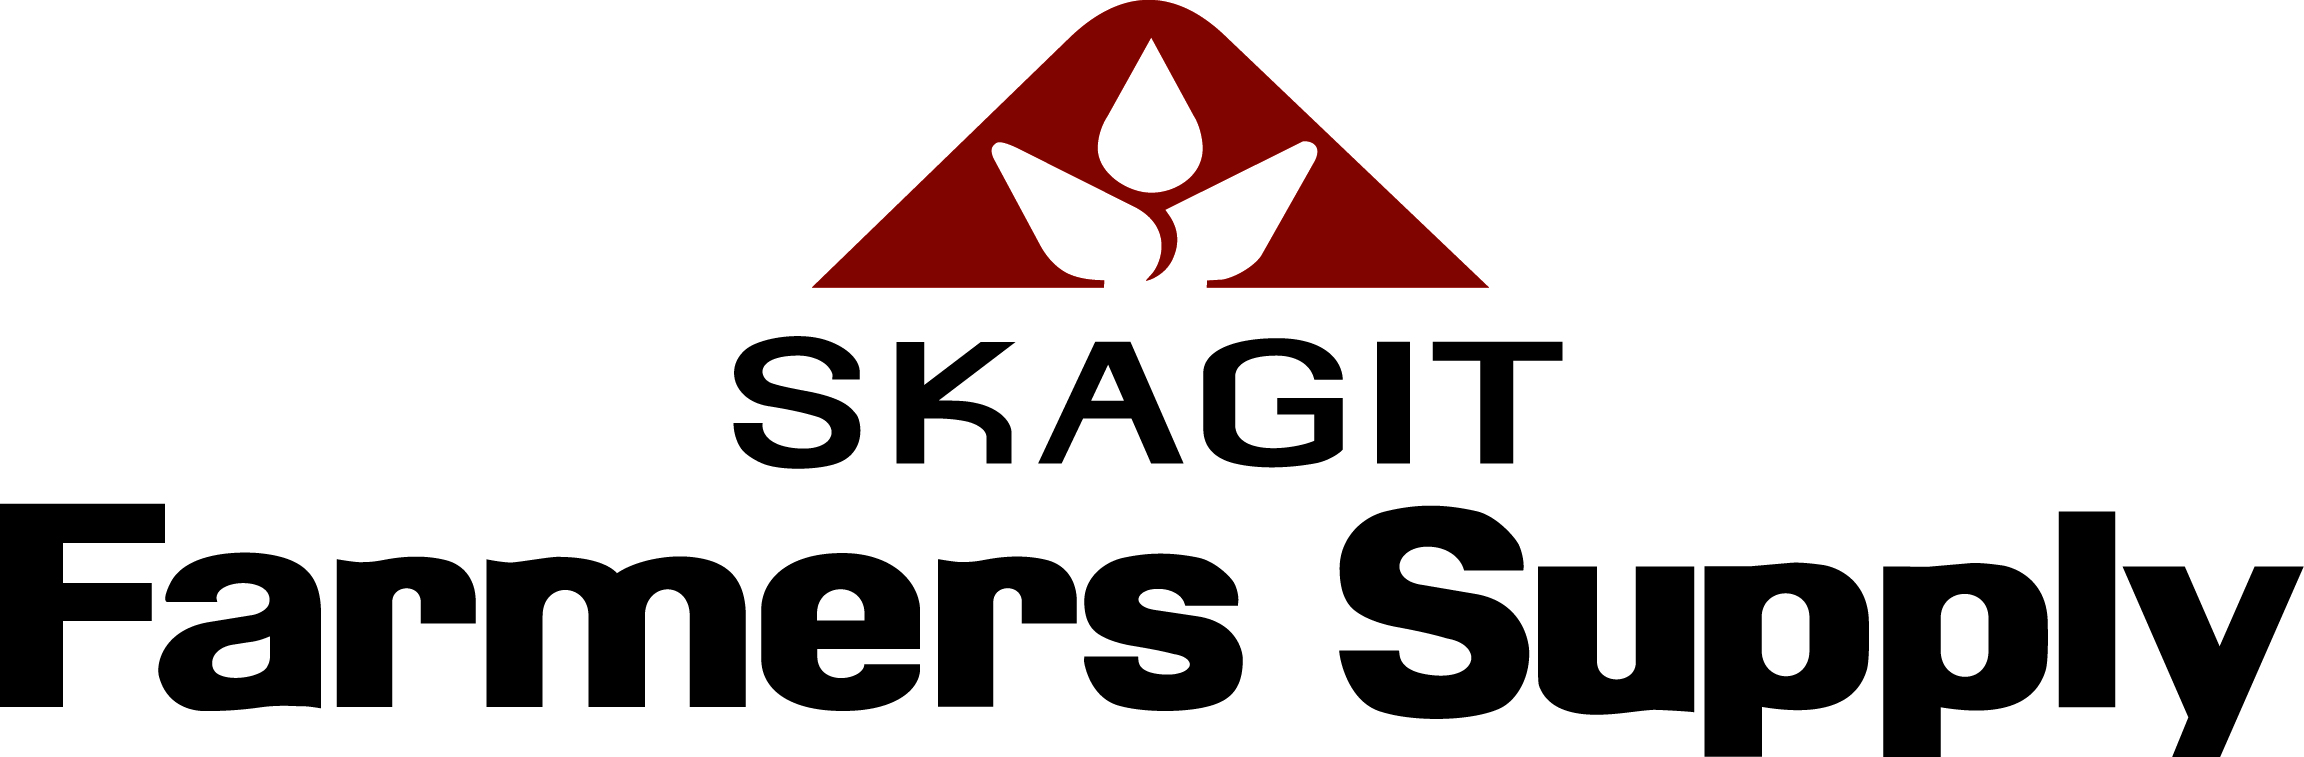 Skagit Farmers Supply's Image